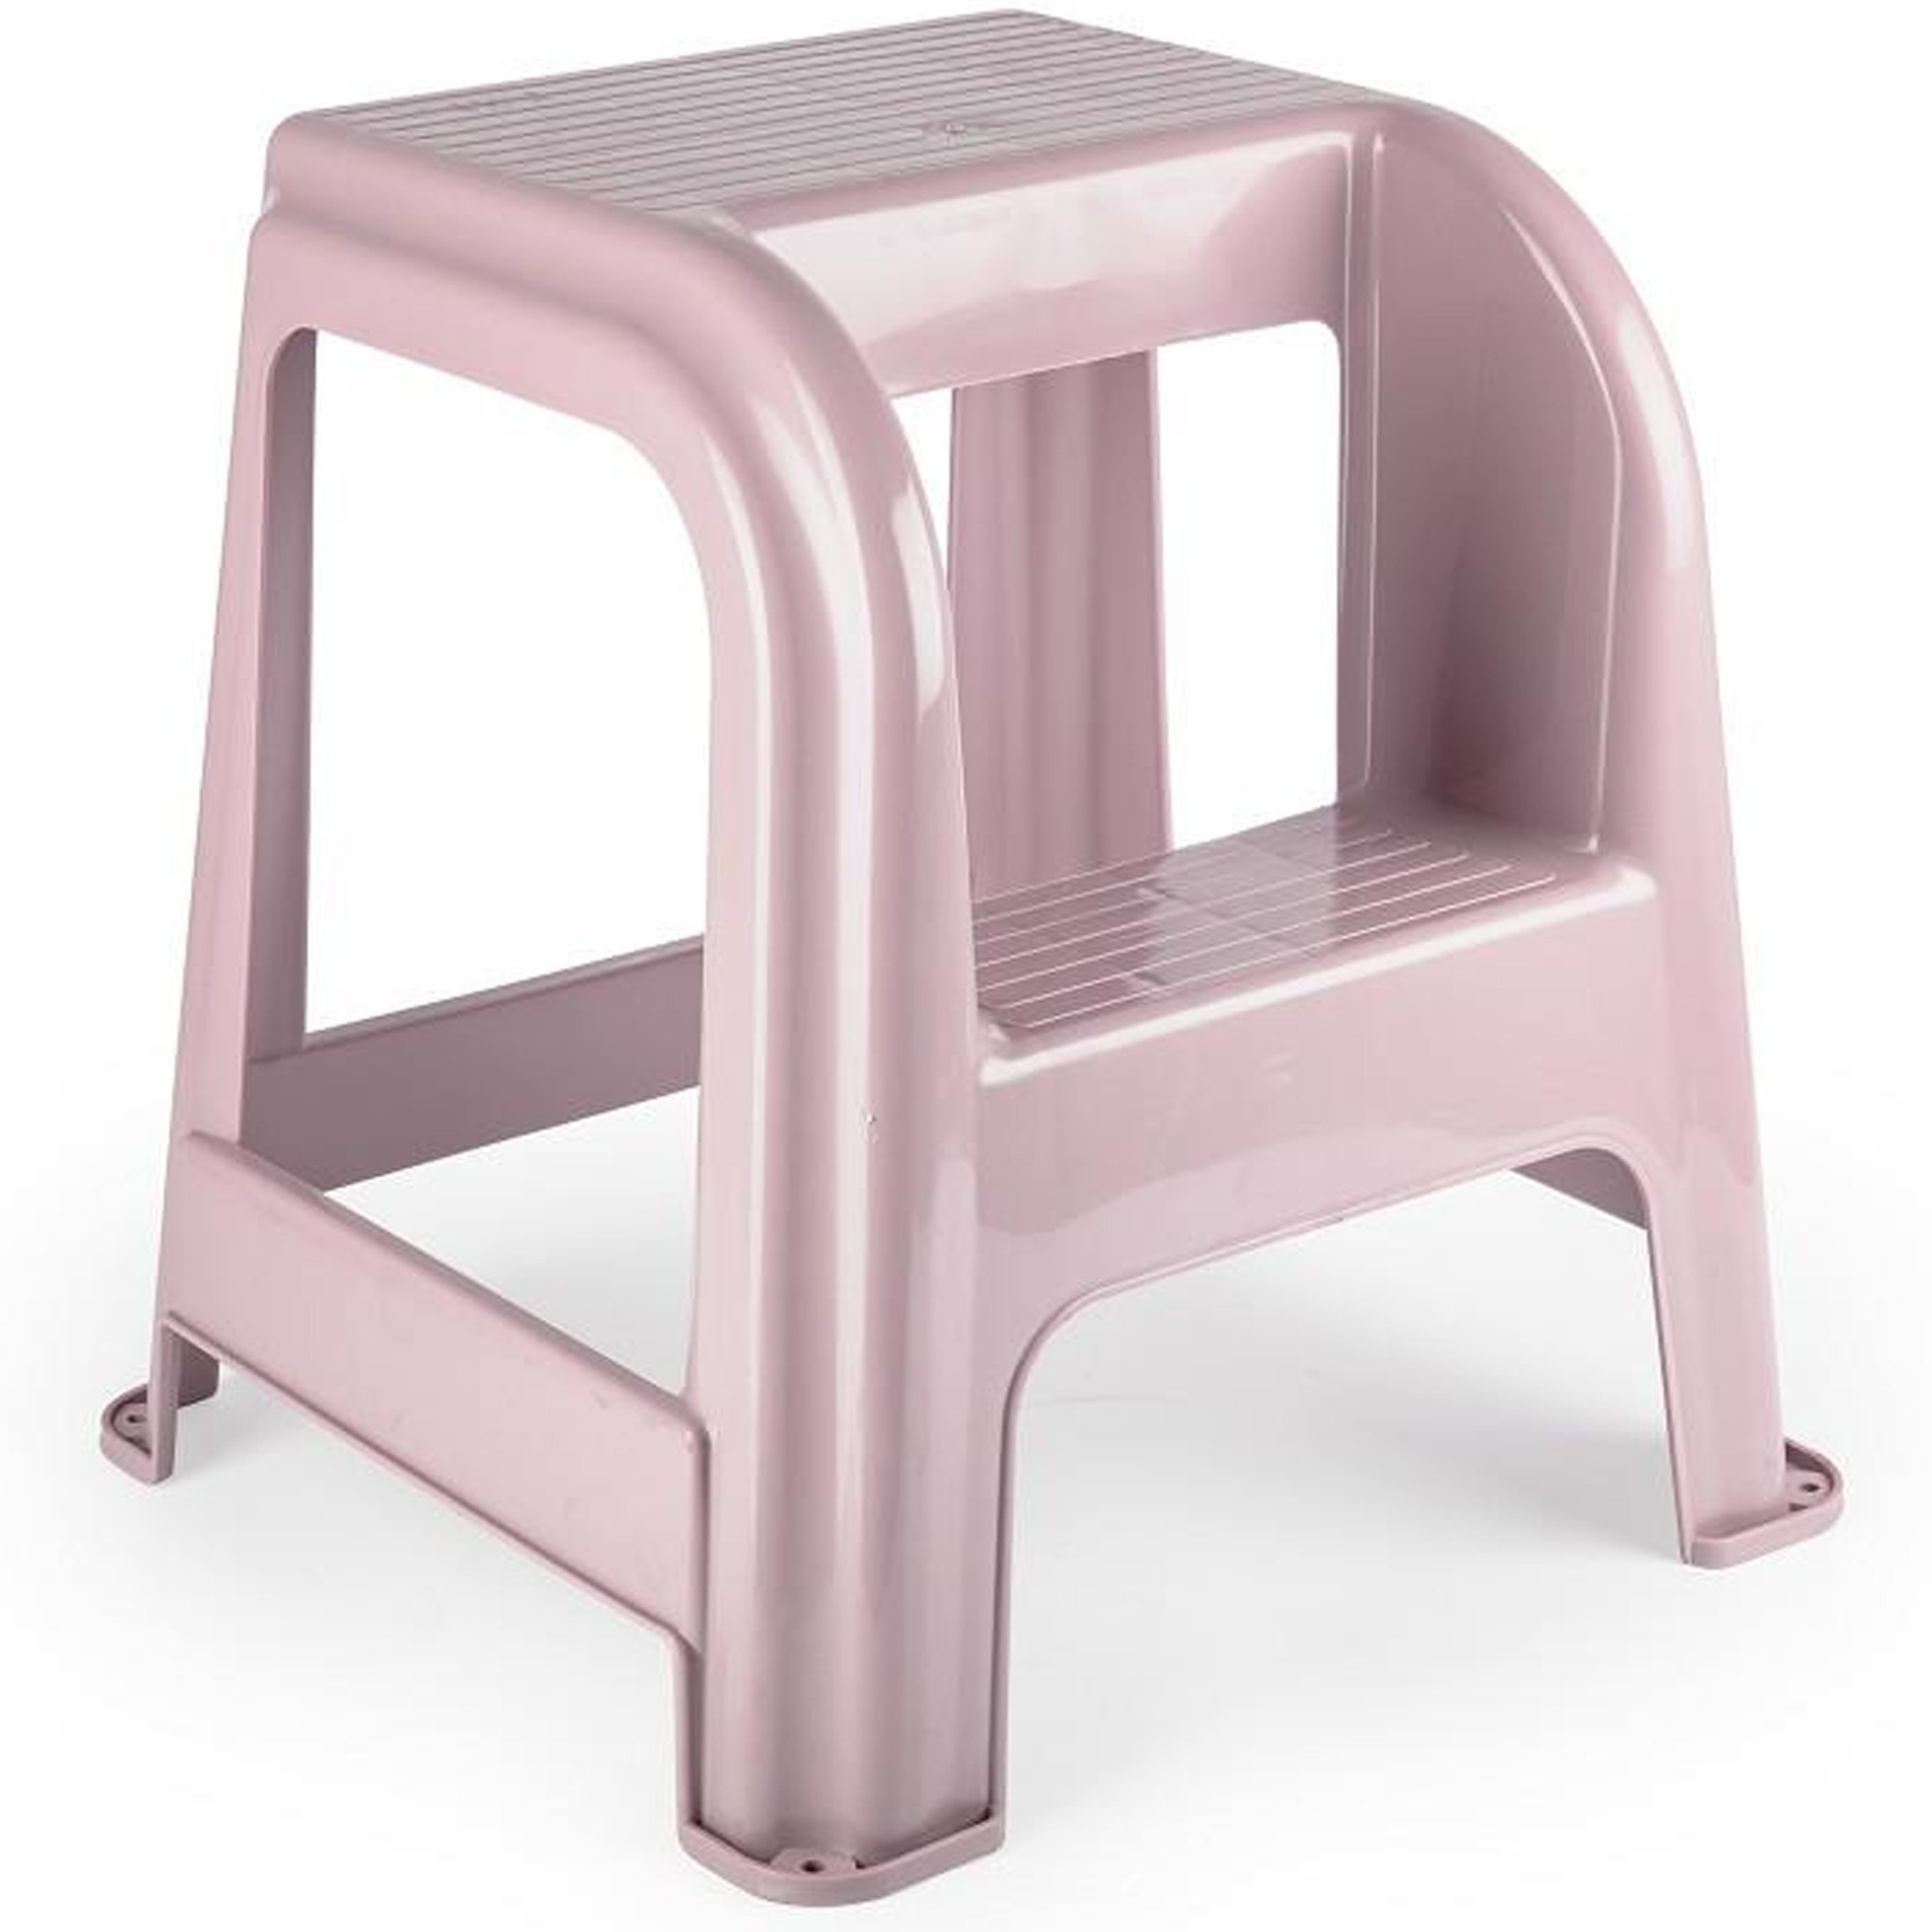 PlasticForte Keukenkrukje/opstapje - met 2 treden - roze - kunststof - 43 x 43 x cm -